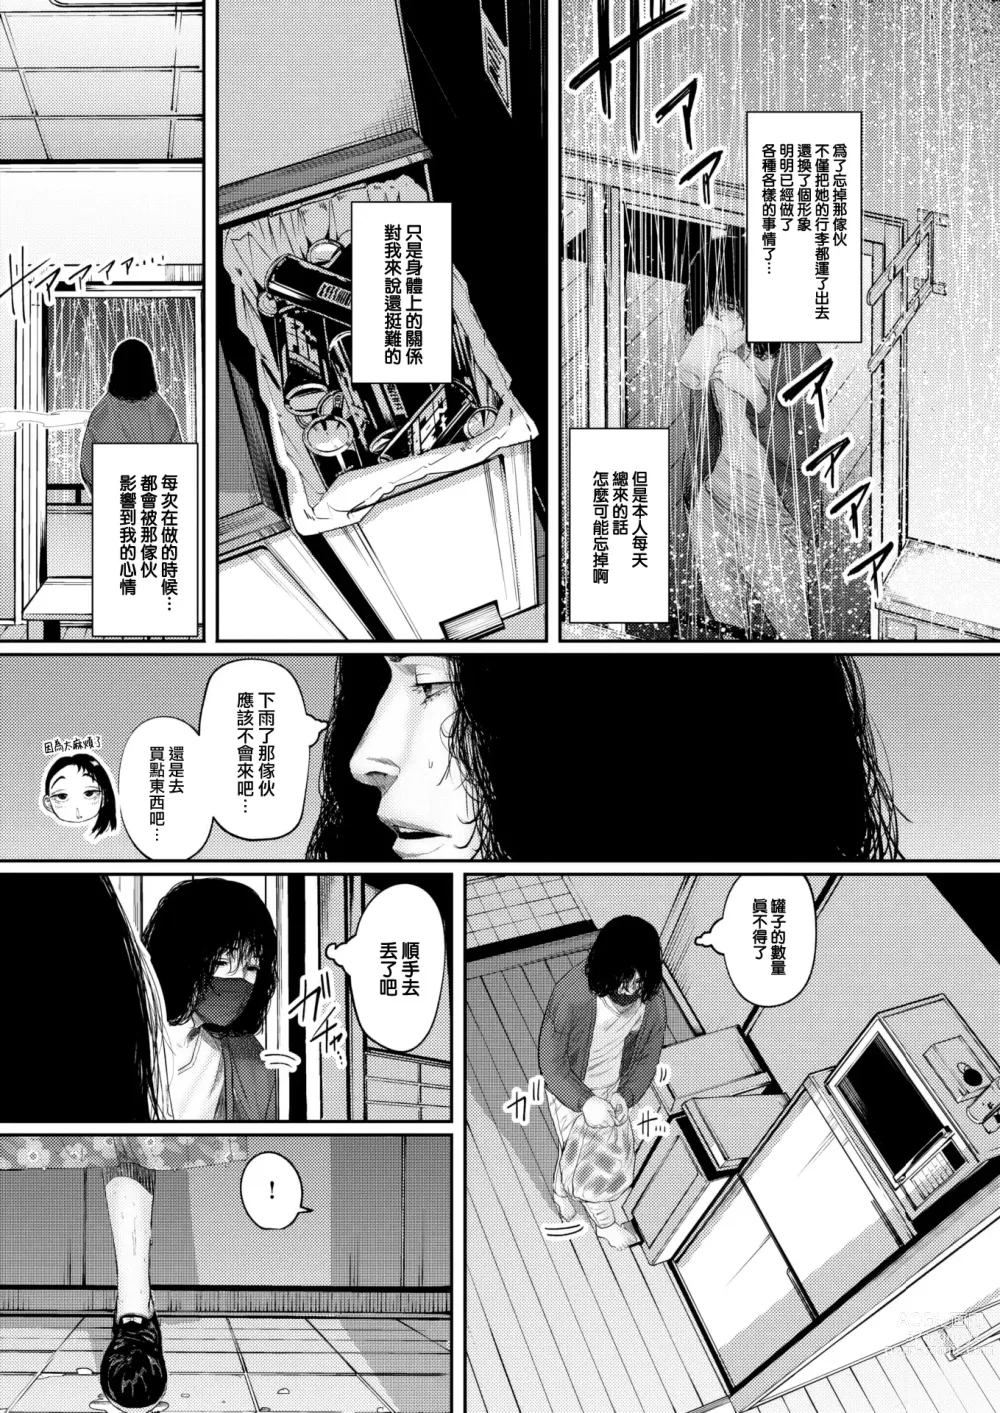 Page 9 of manga Ame ni Furarete Ji Katamaru - After a storm comes a love